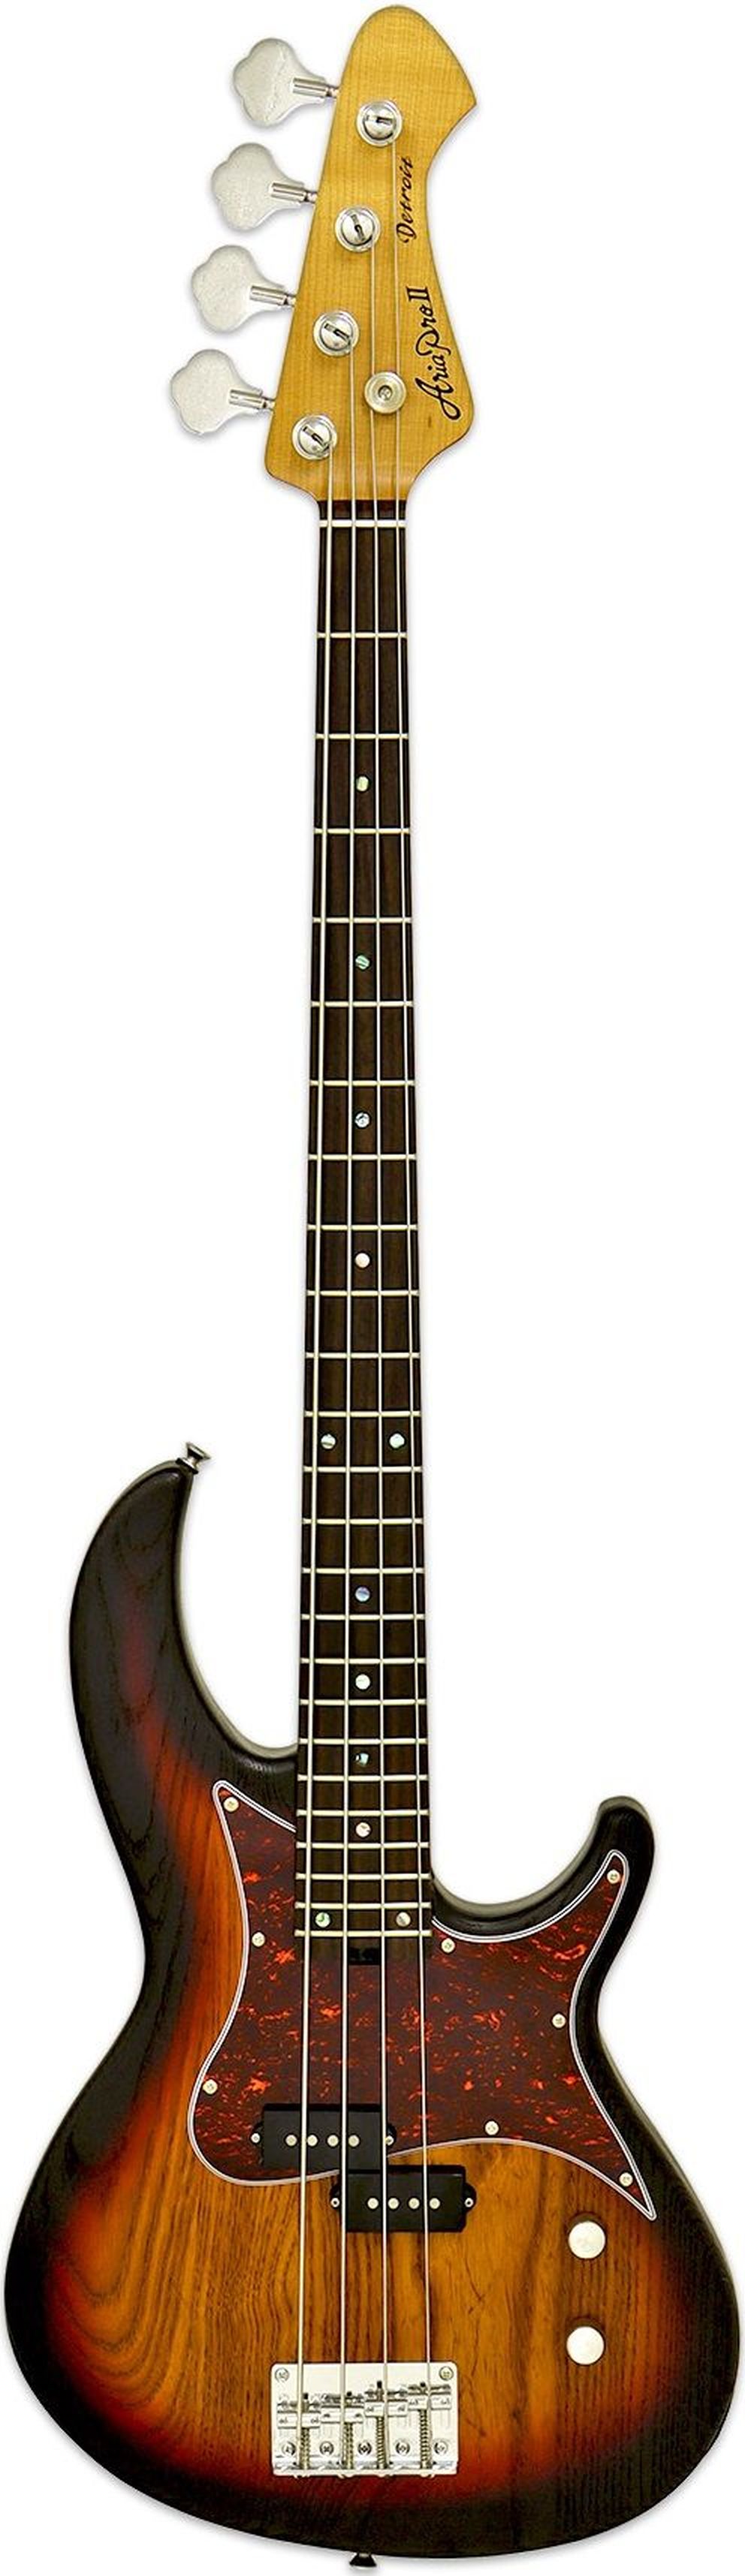 Бас-гитара Aria Pro II 313-DR OPSB, 4 струны, 24 лада, корпус Ясень, гриф Клен